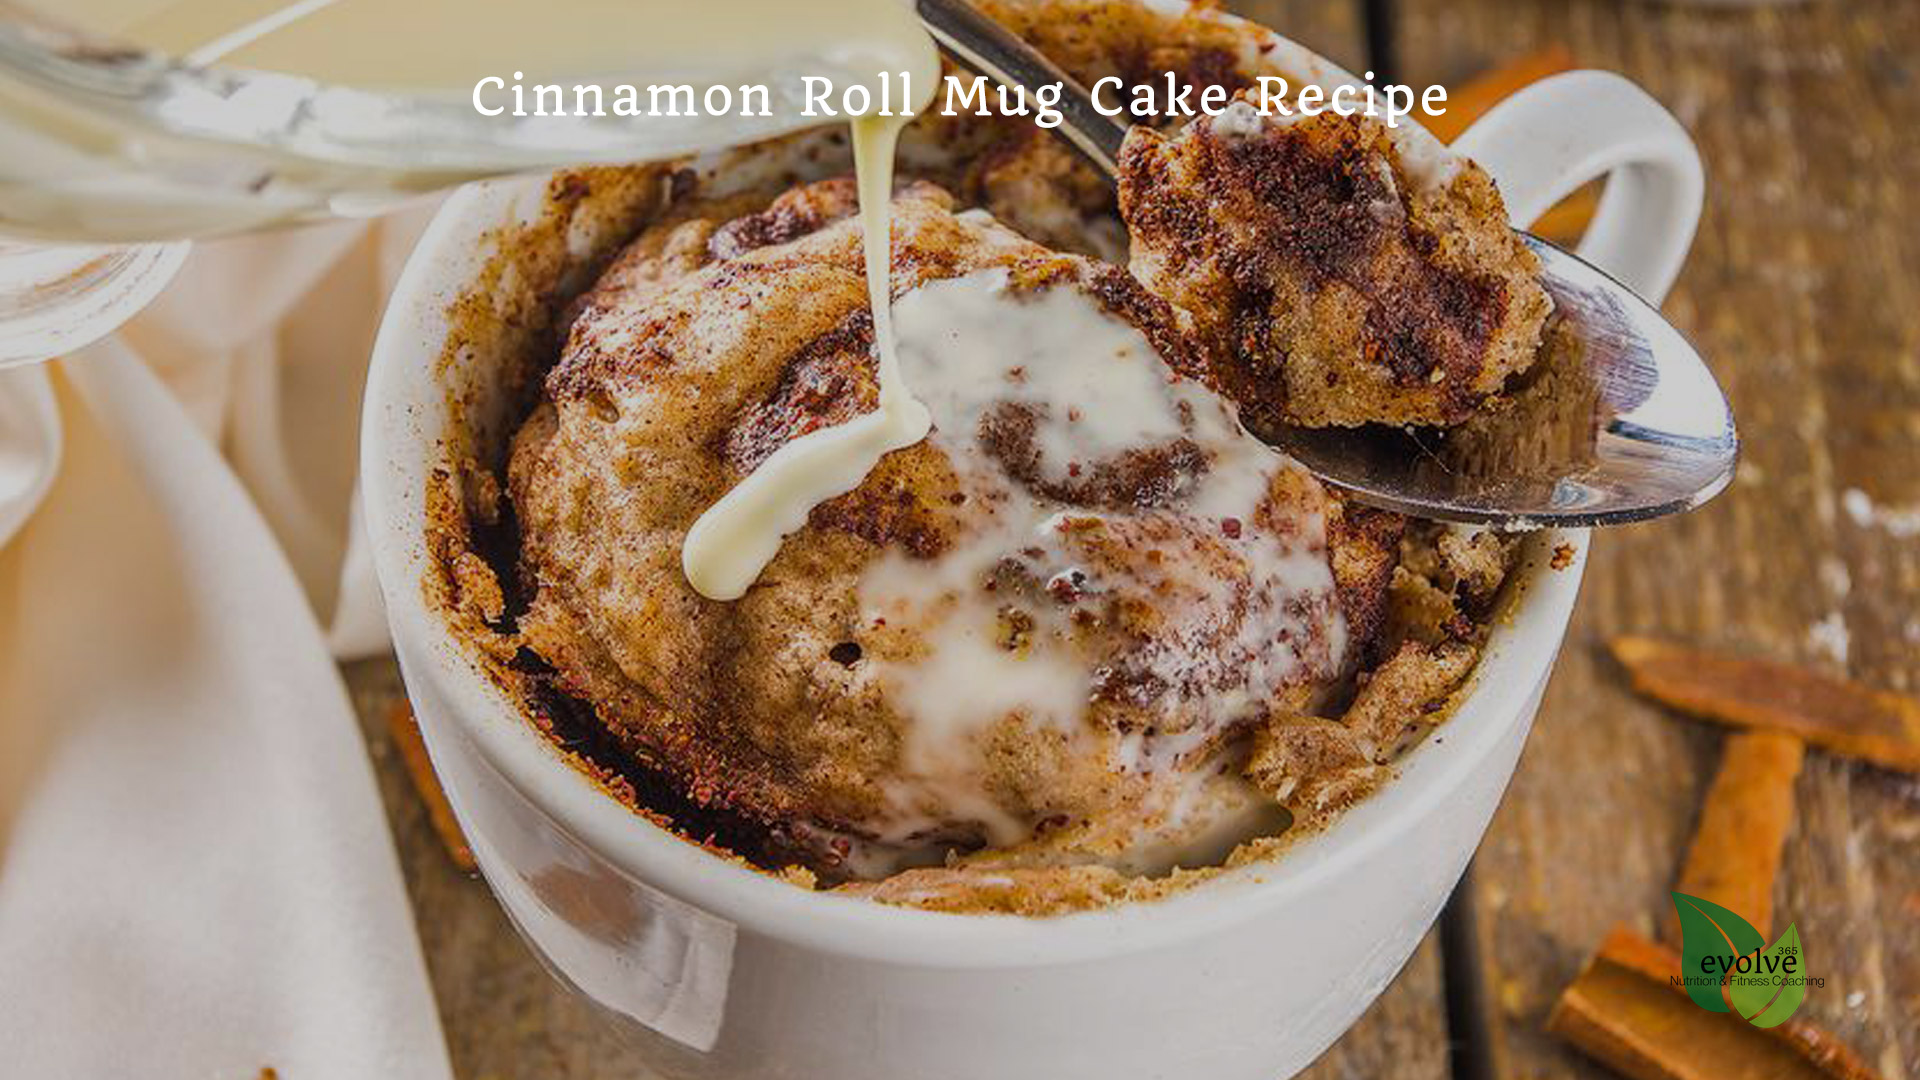 Cinnamon Roll Mug Cake Recipe Featured